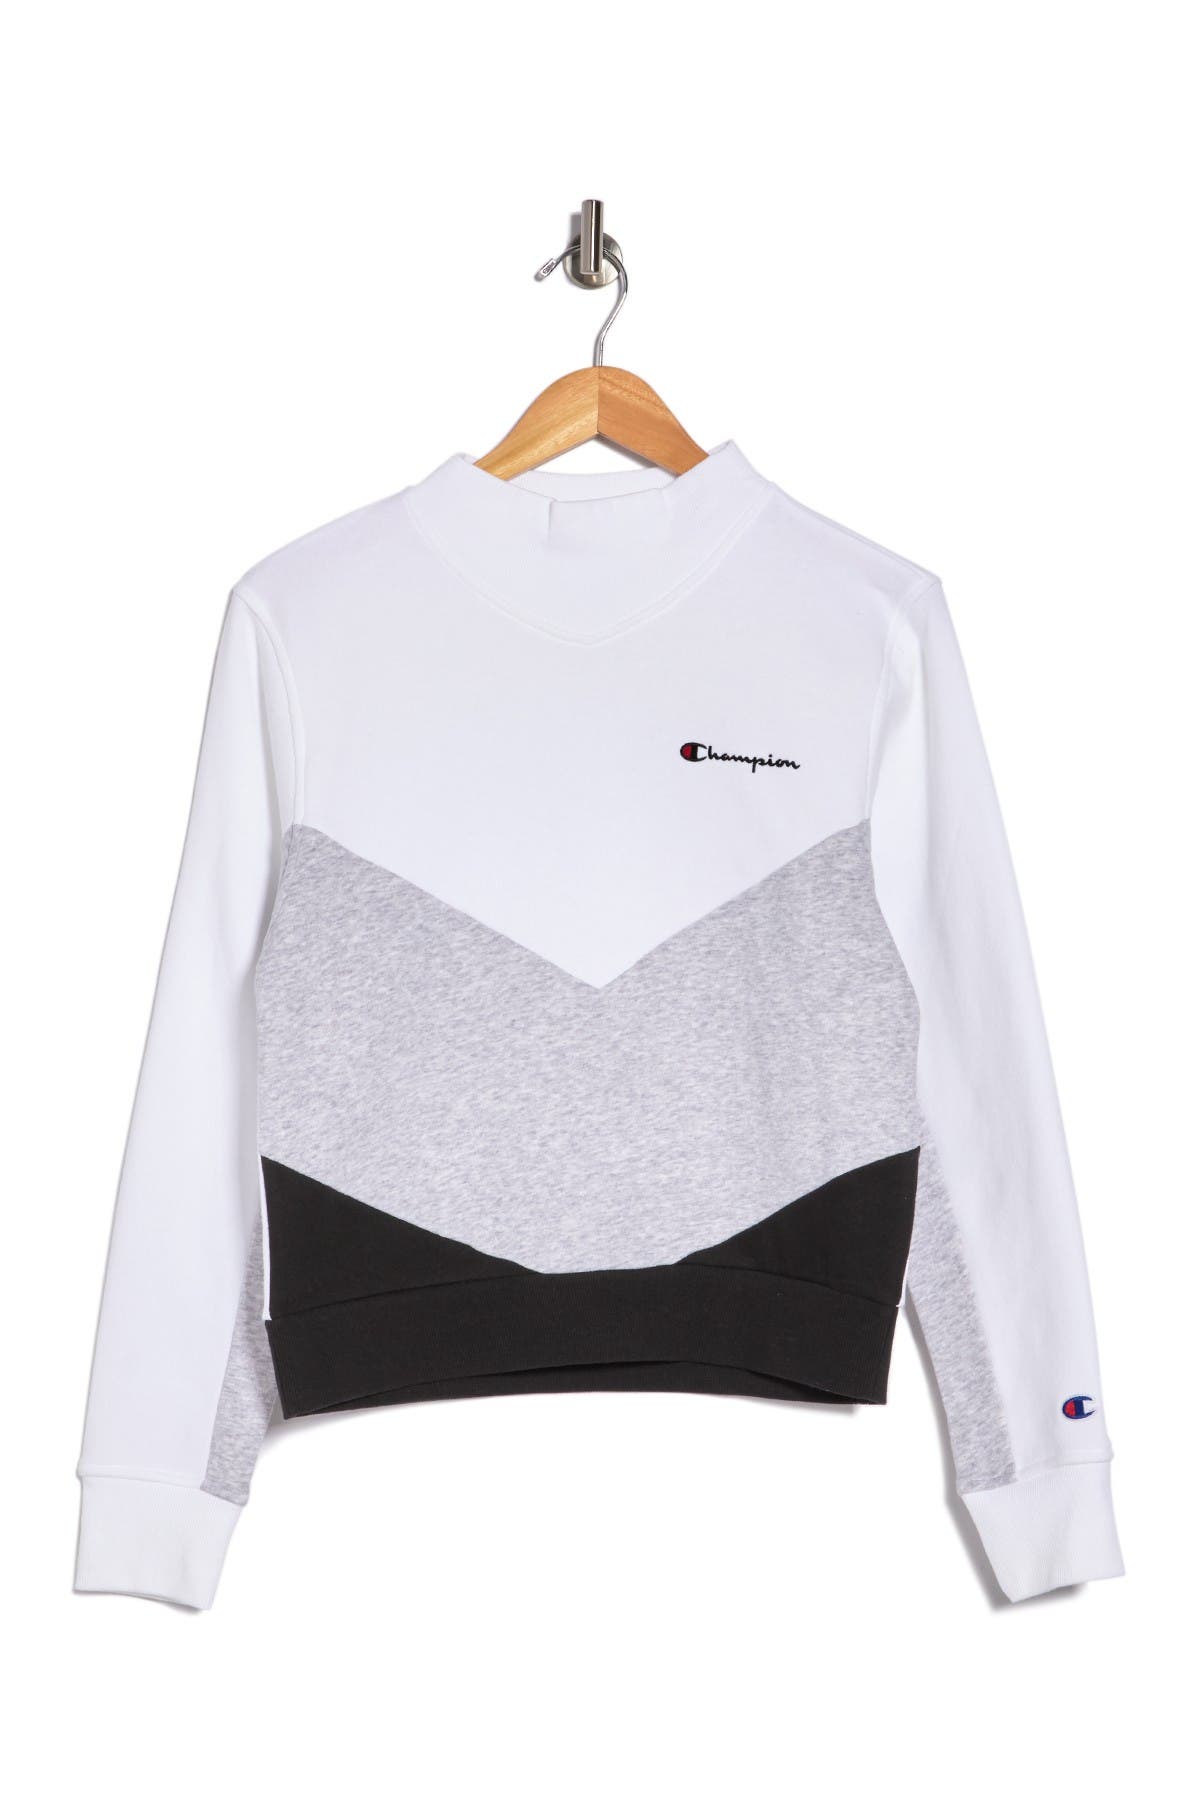 Champion Women's Campus Colorblocked Fleece Sweatshirt In White/oxfo ...